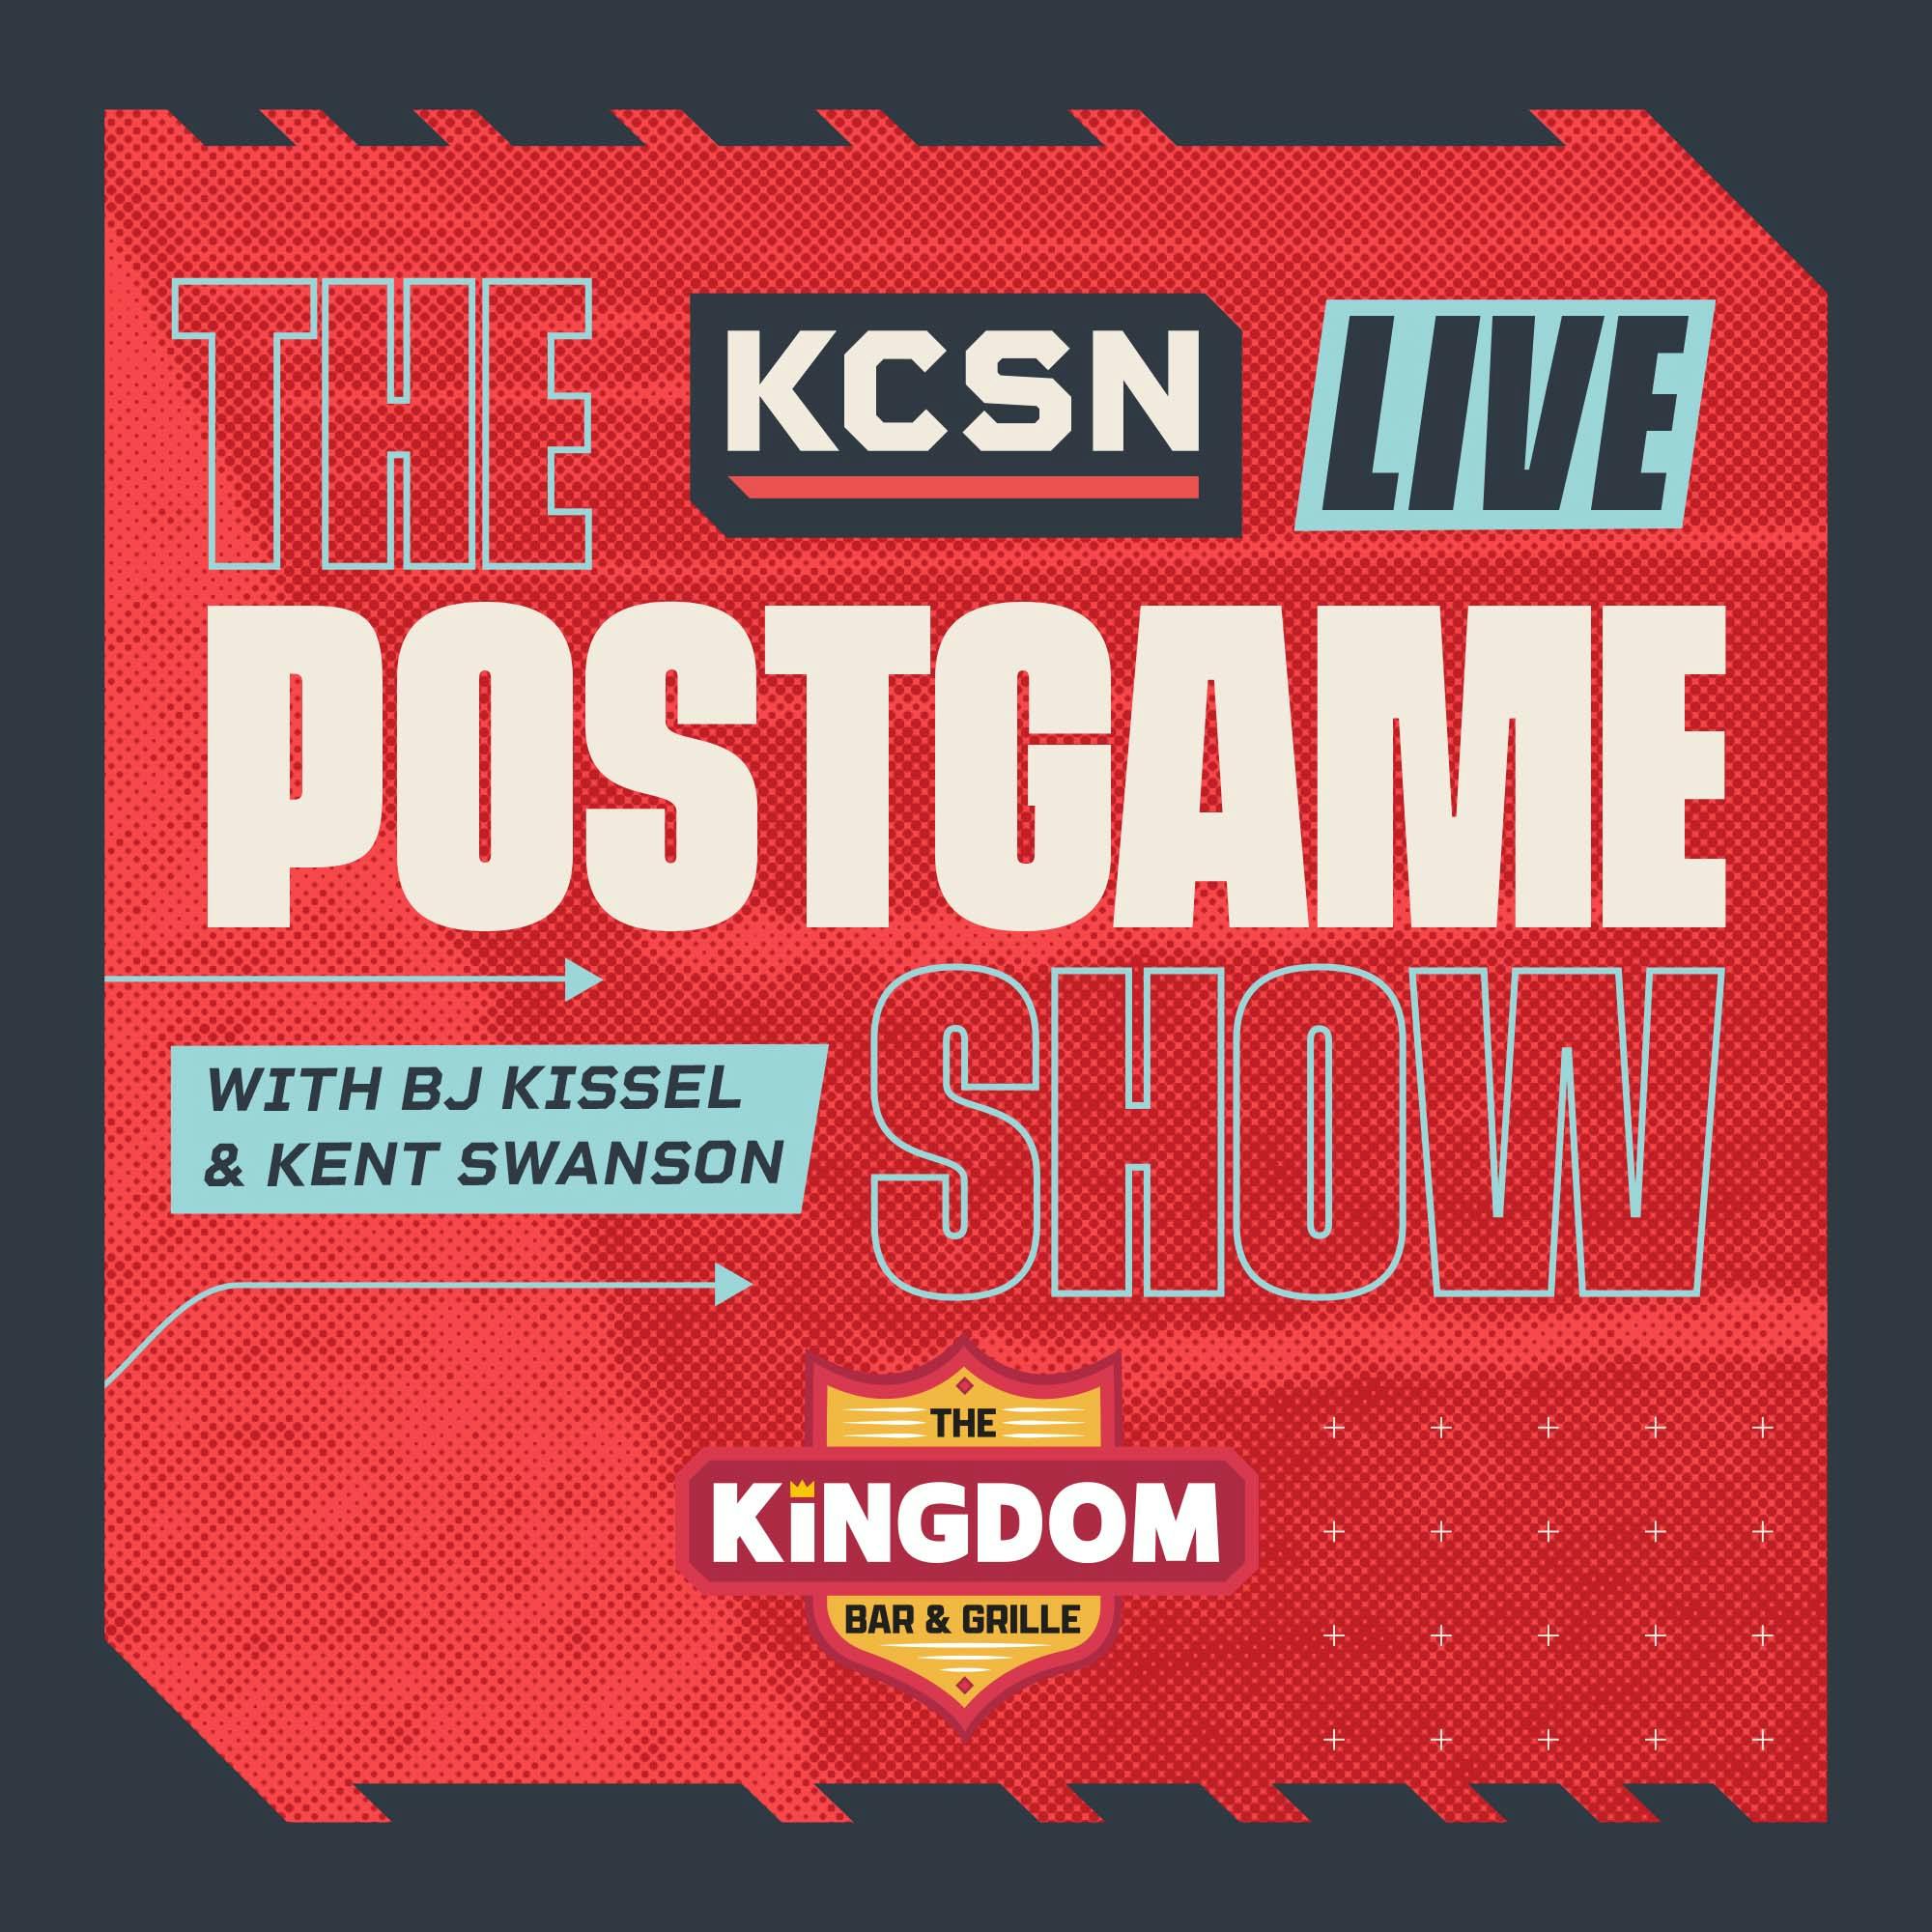 Chiefs vs. Colts LIVE Postgame REACTION | KCSN Live Postgame Show 9/25